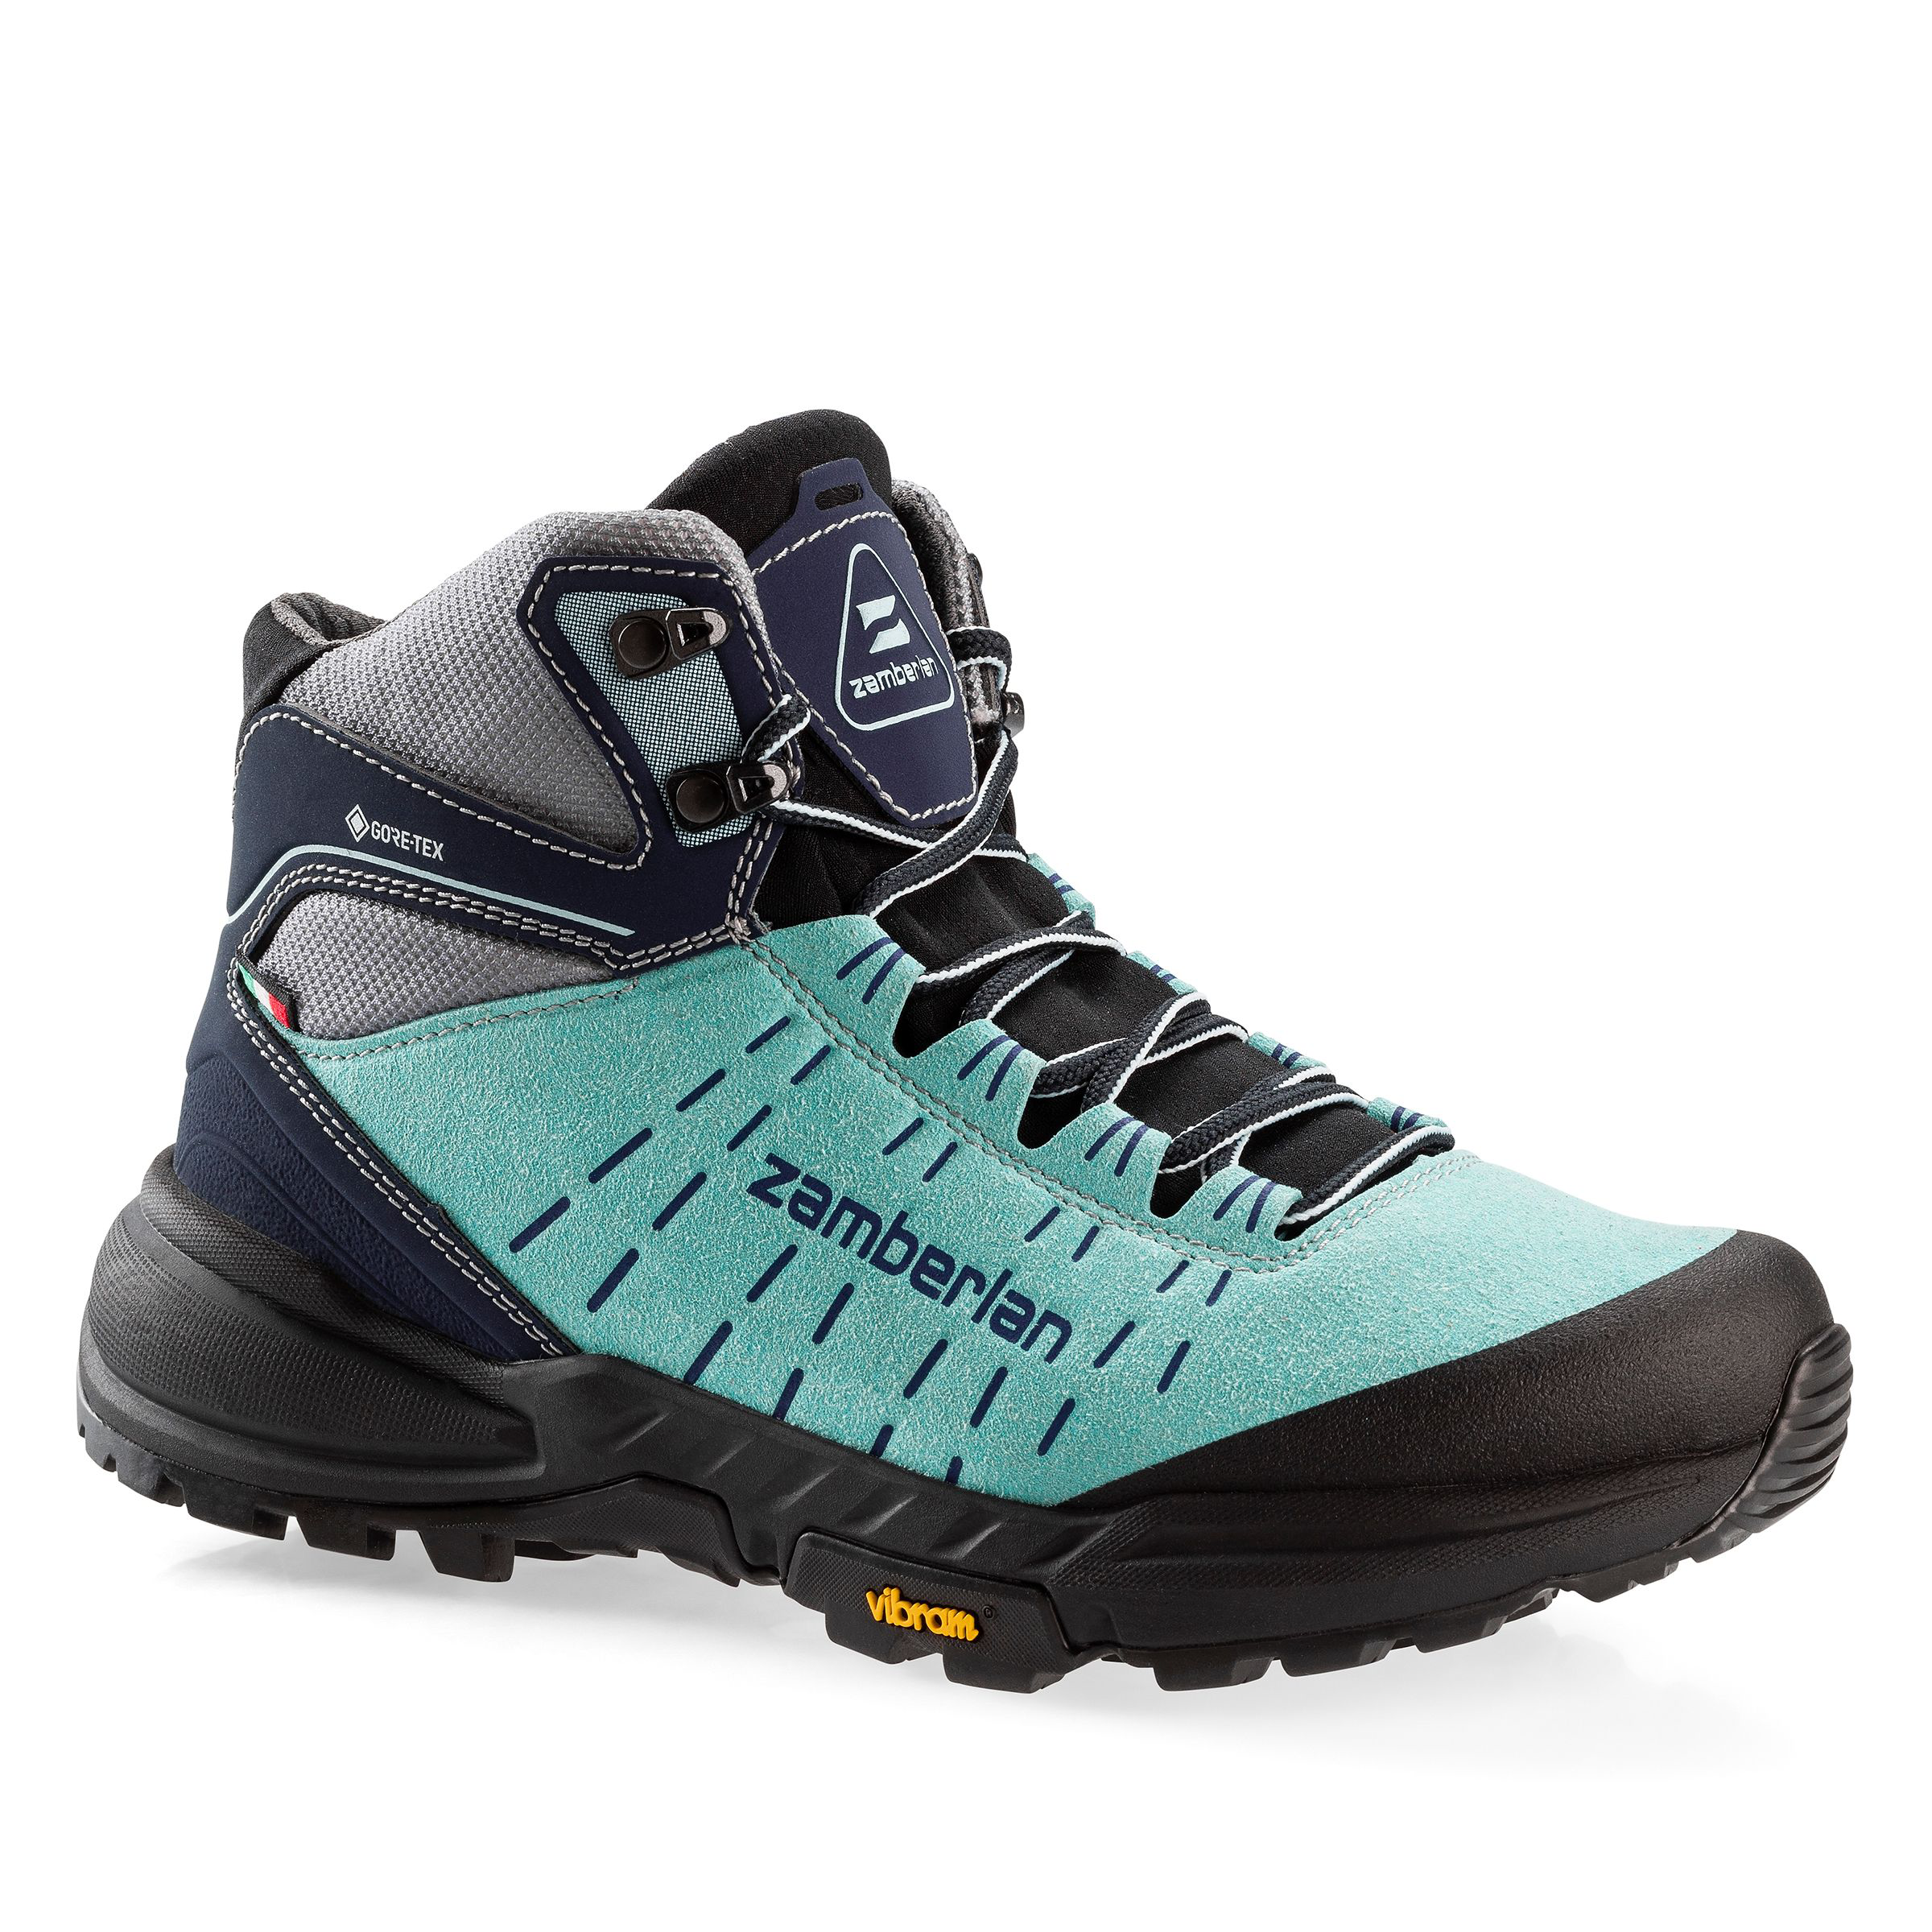 Zamberlan 334 Circe GTX Waterproof Hiking Boots for Ladies - Blue - 11M